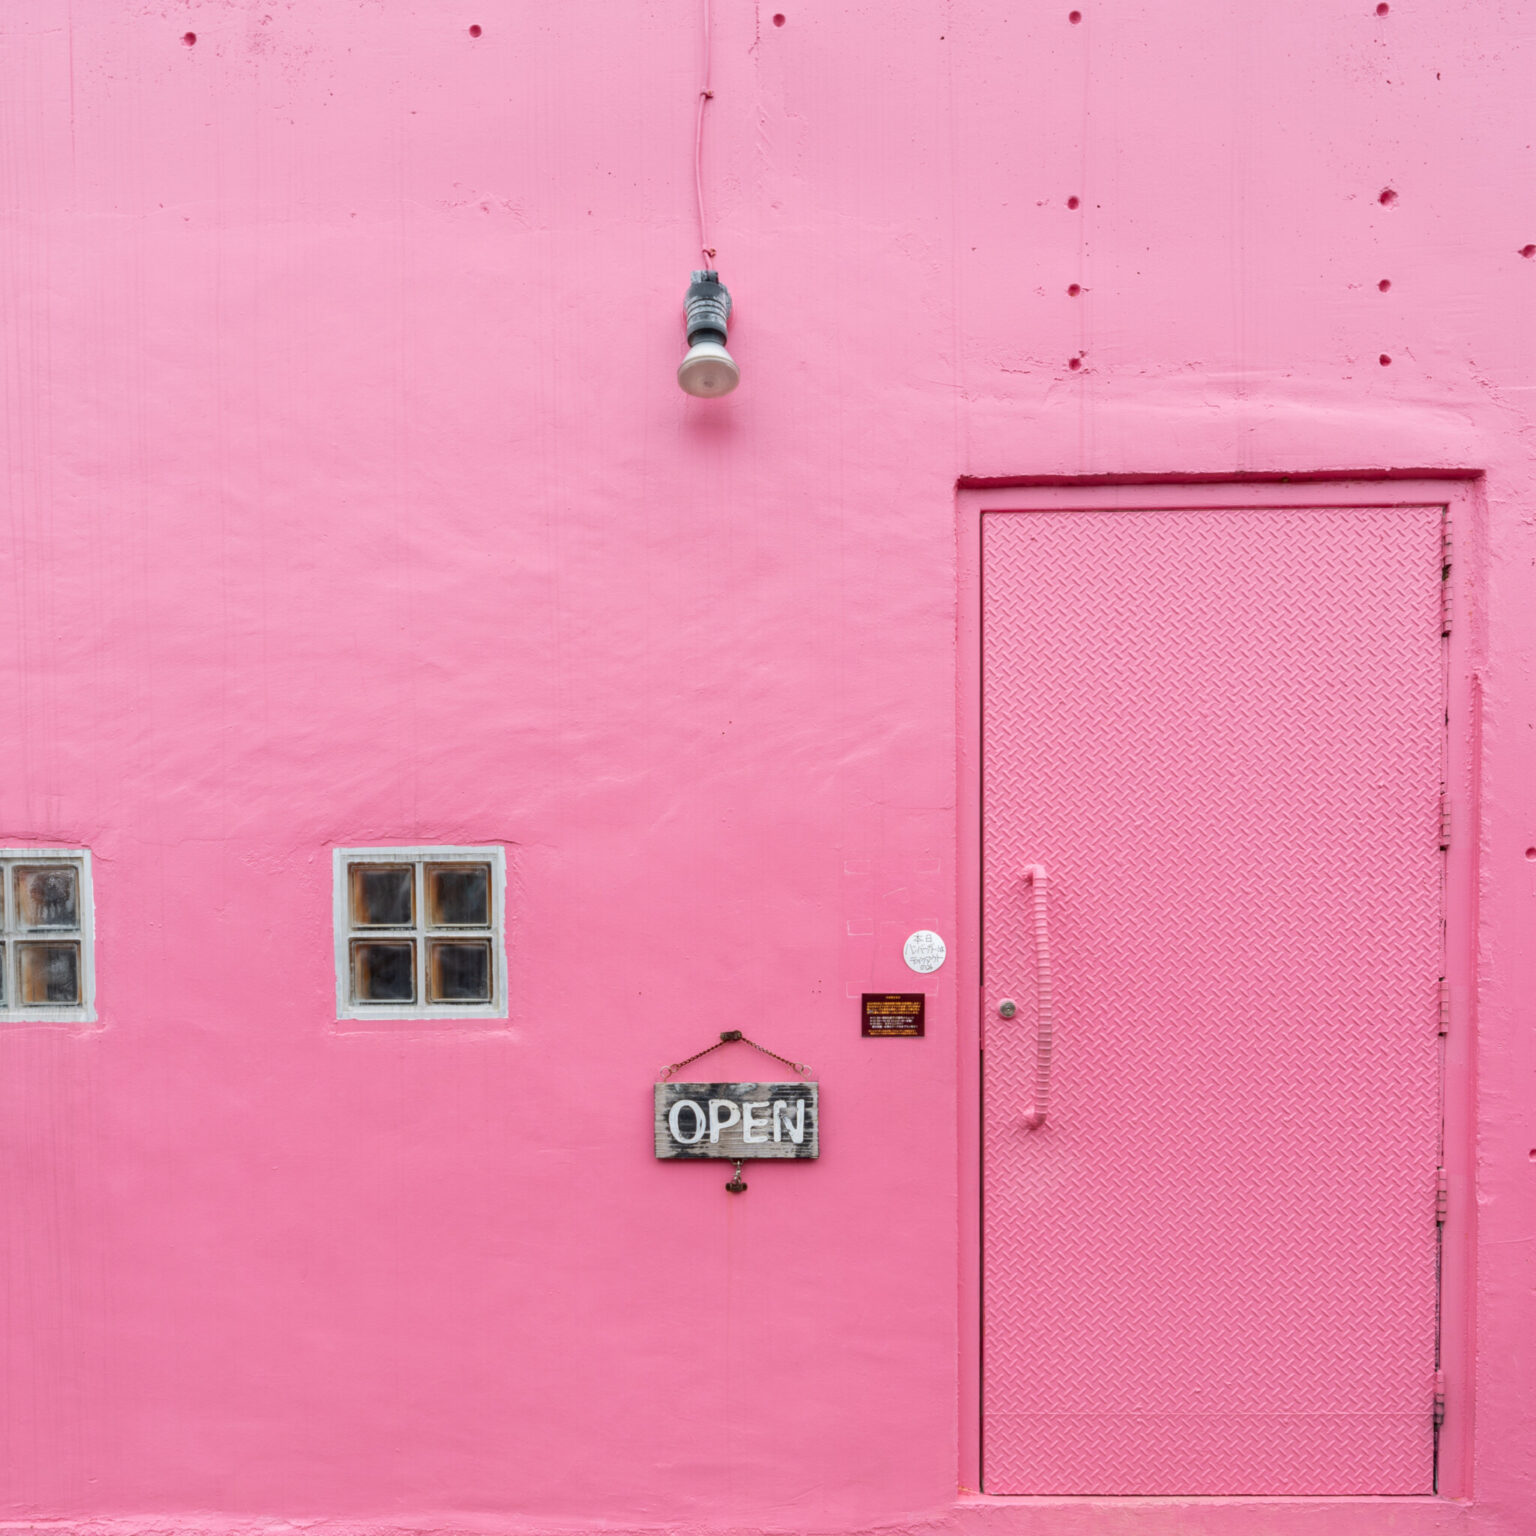 #insula #ピンクの建物が目印